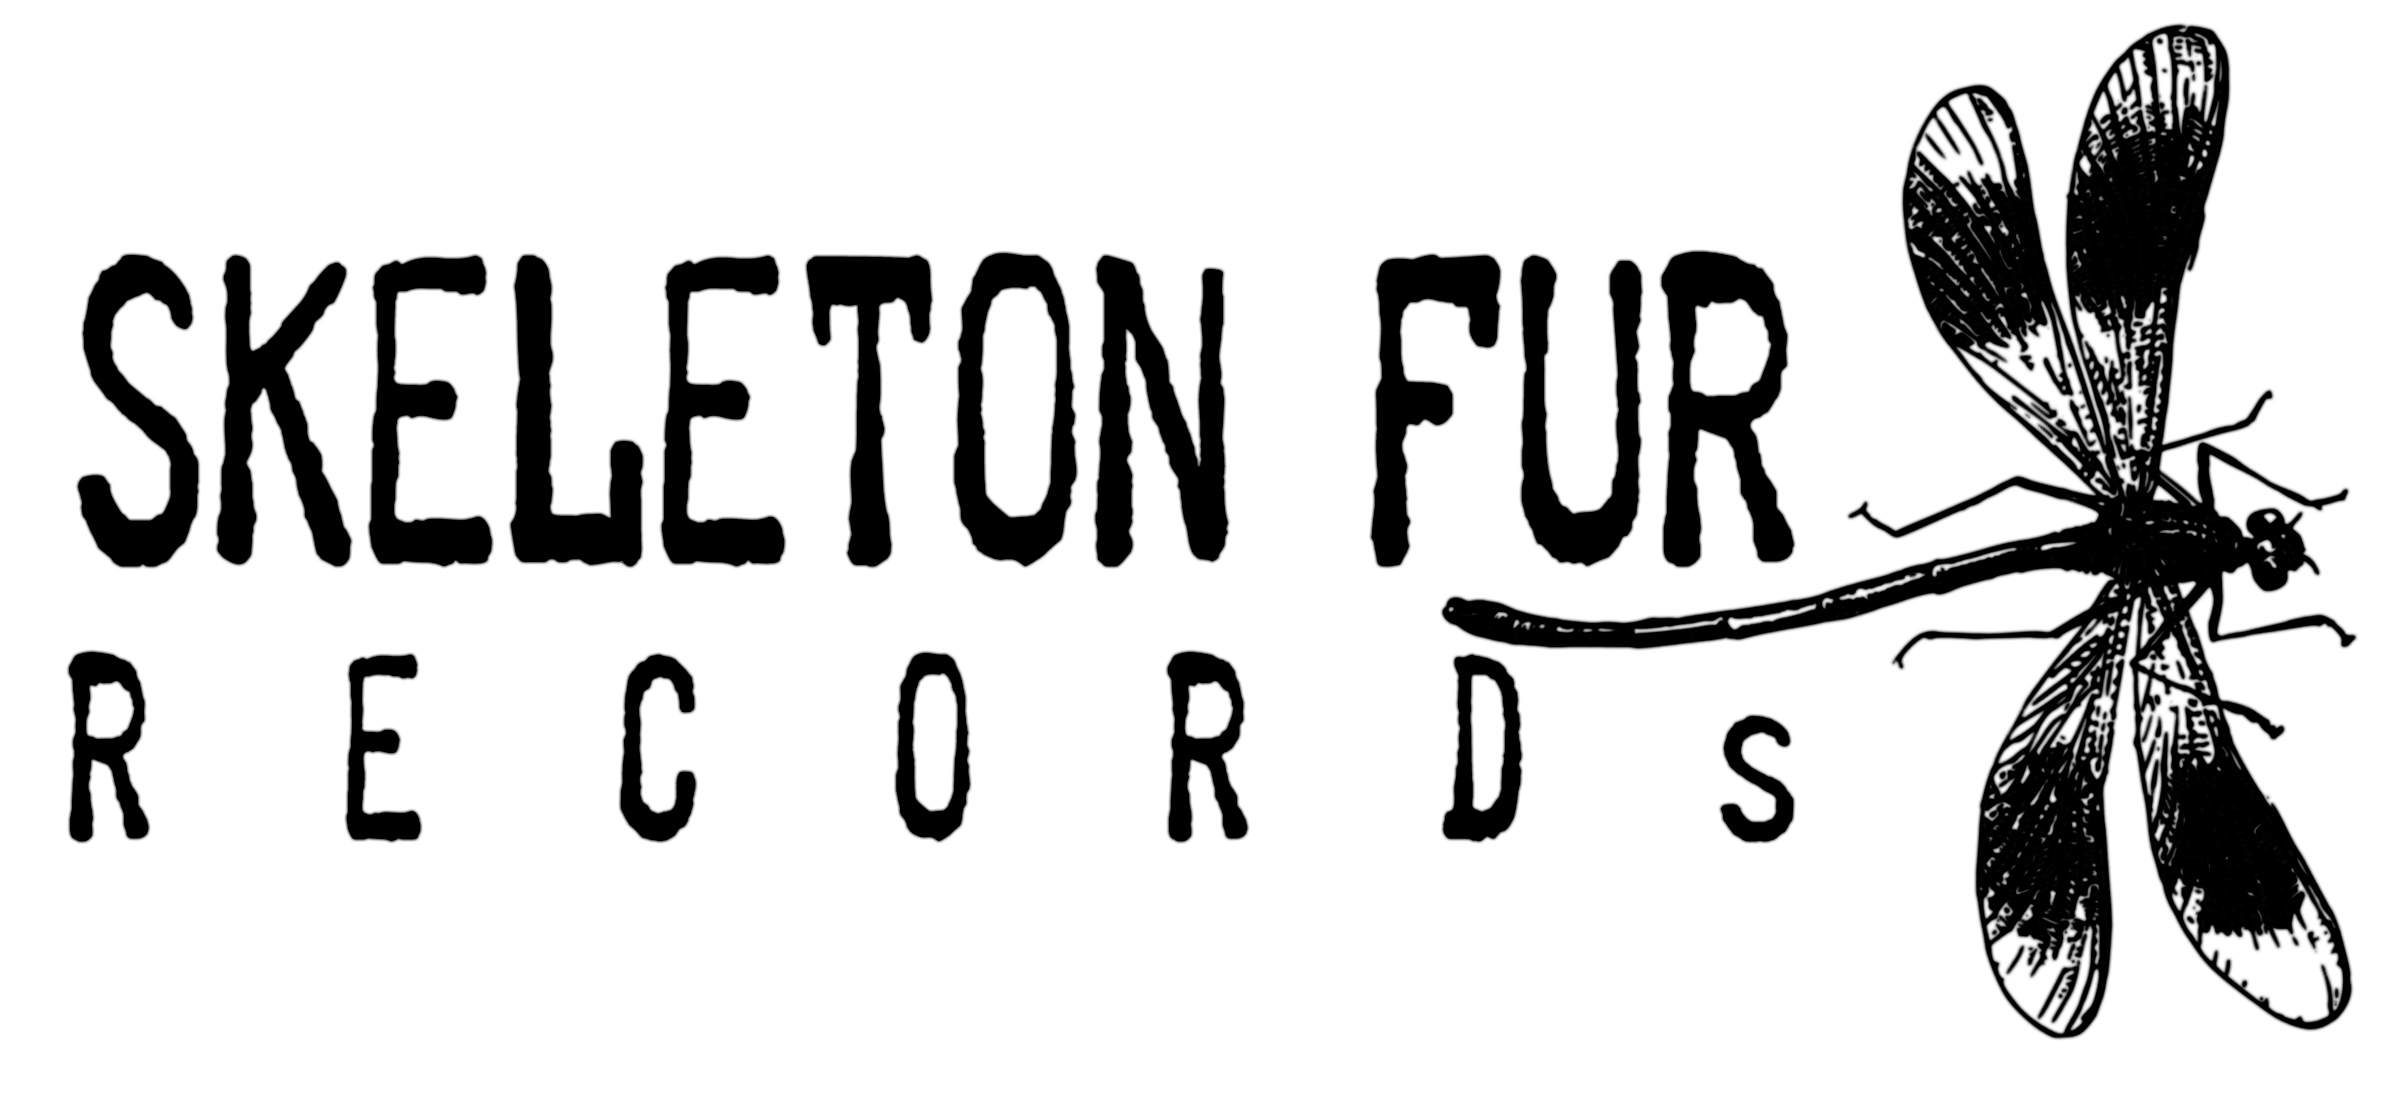 Skeleton Fur Records